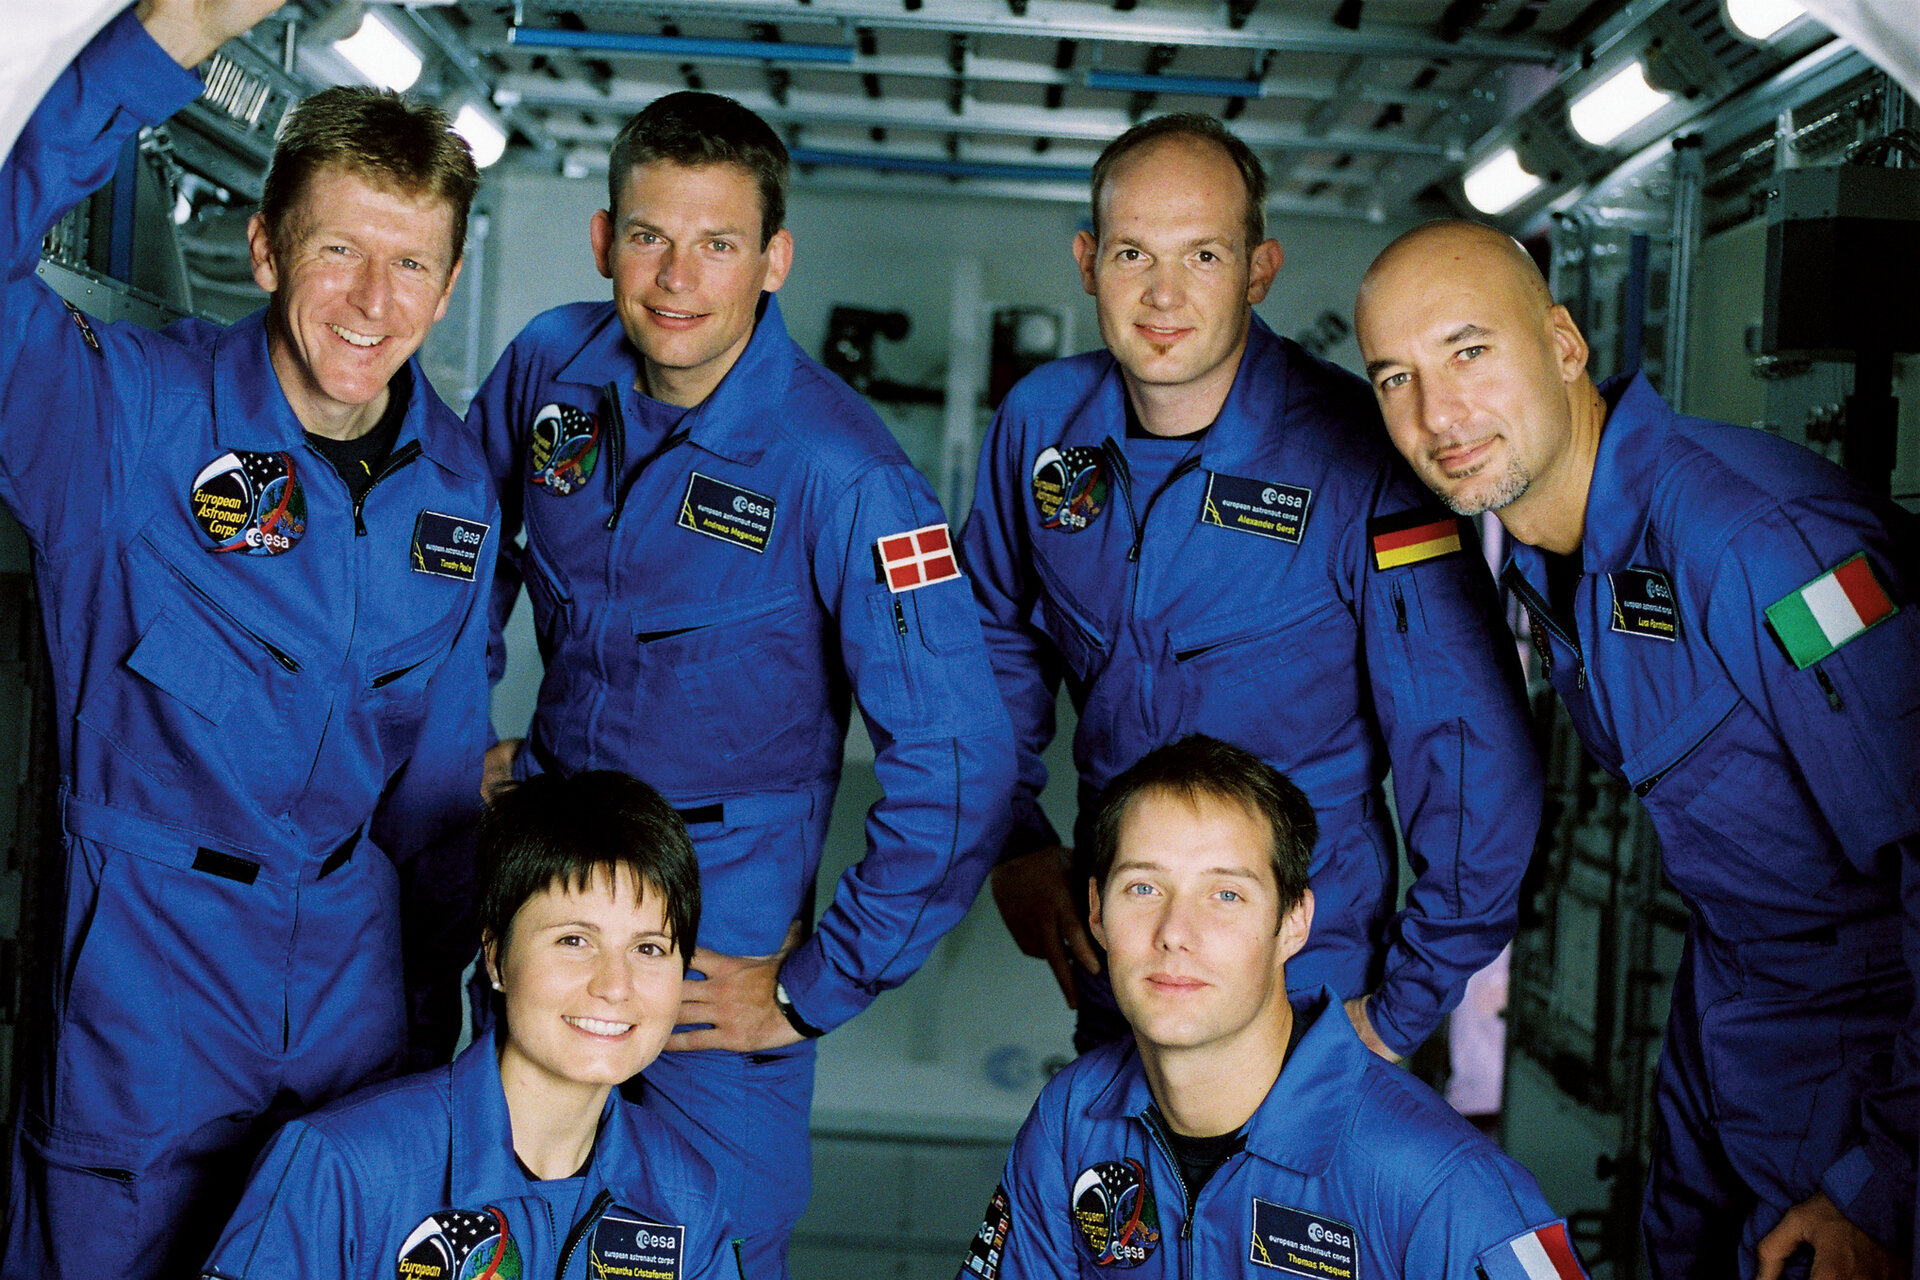 Europe's new astronauts